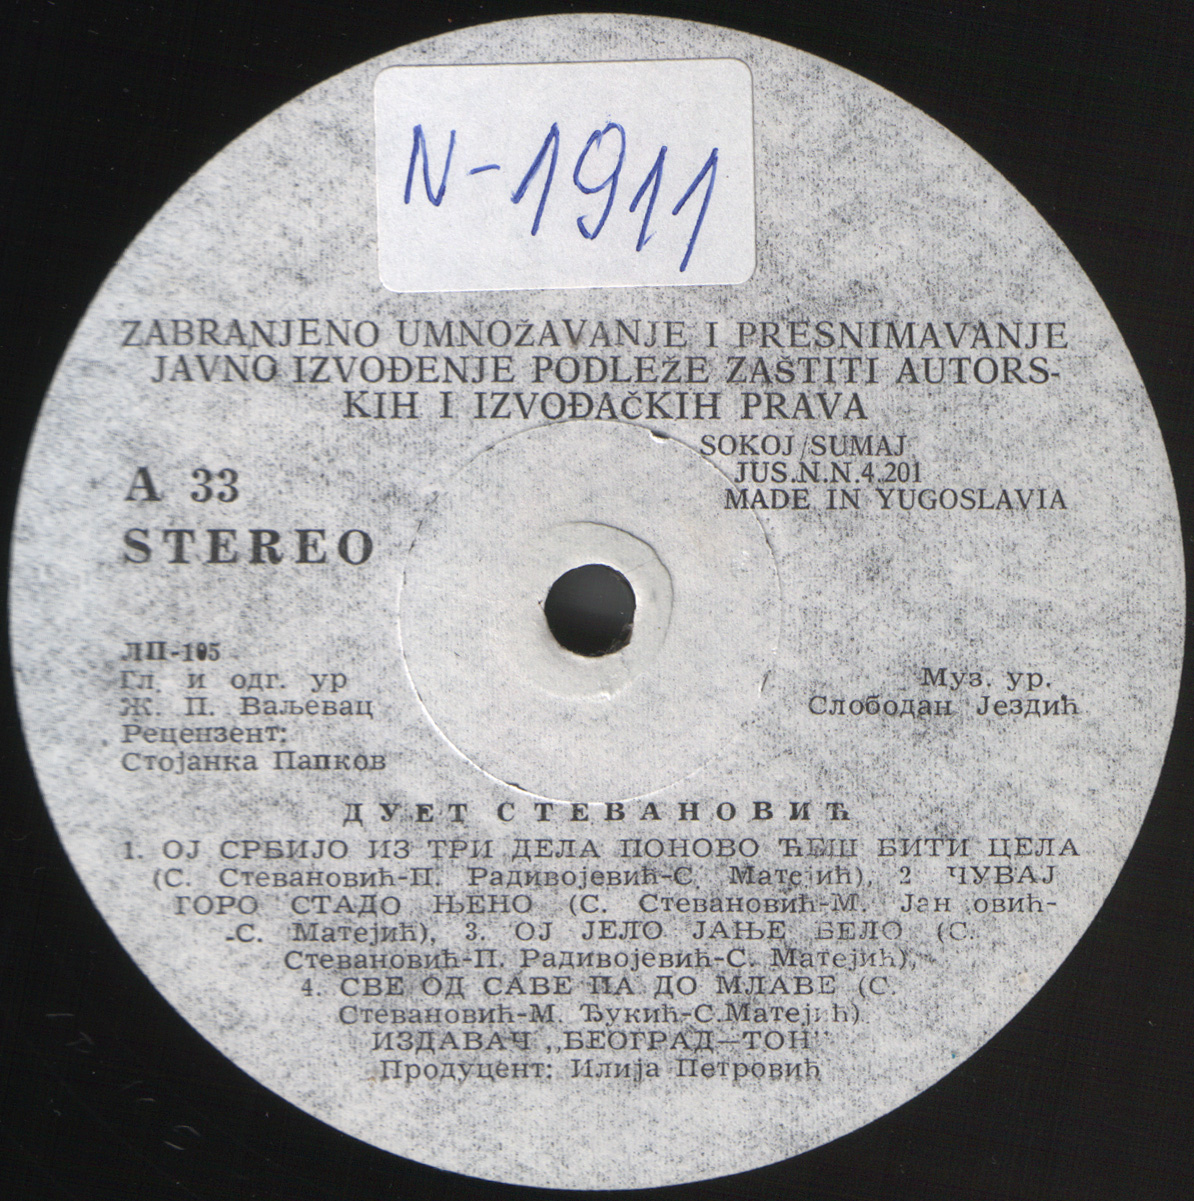 Duet Stevanovic 1989 A